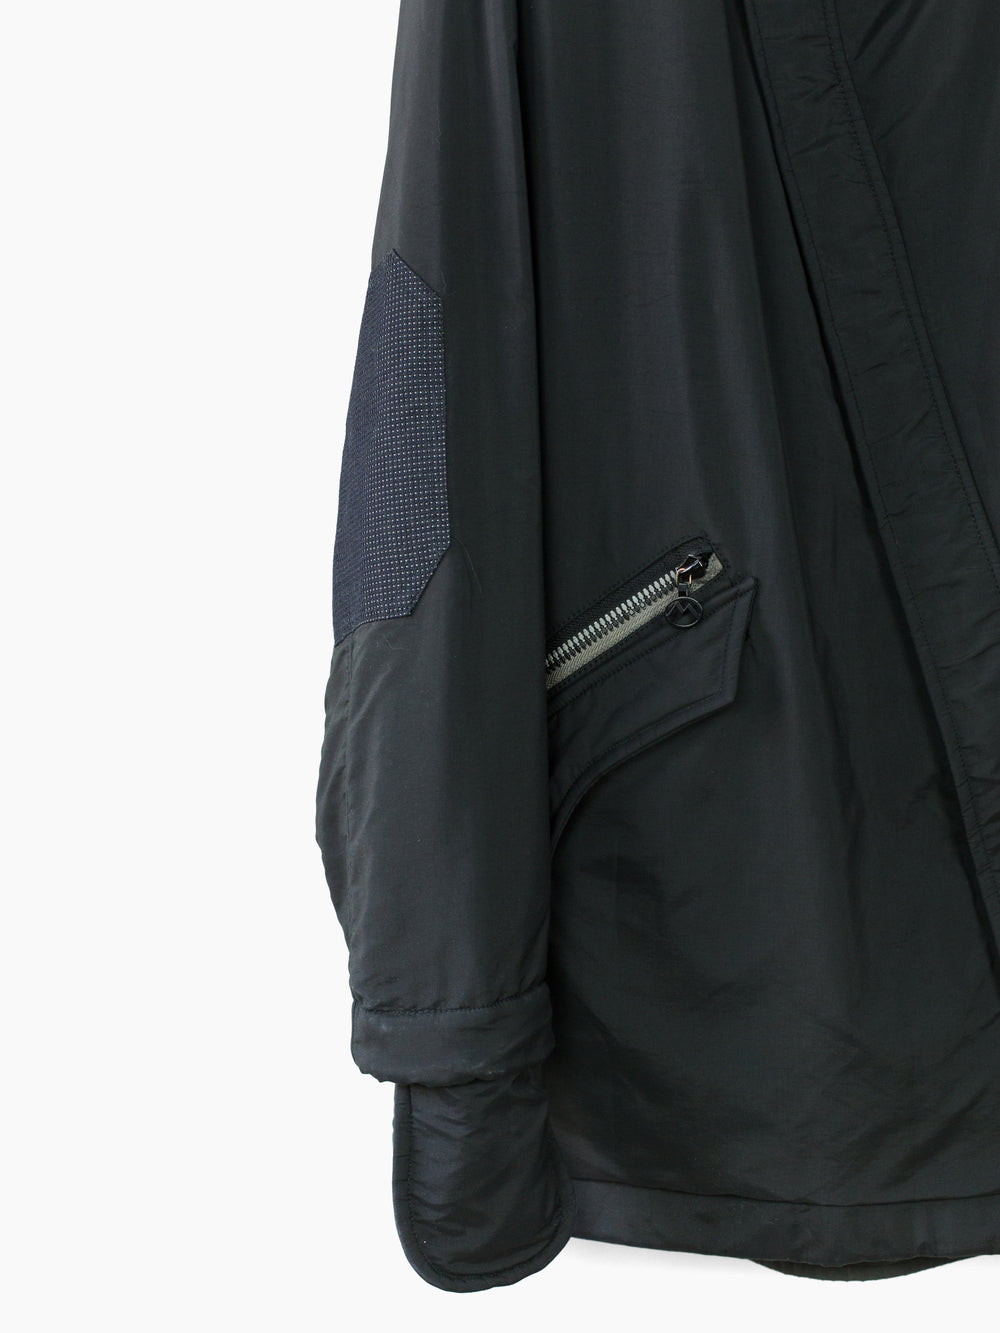 Maharishi 99AW Asymmetrical Zip Rain Jacket